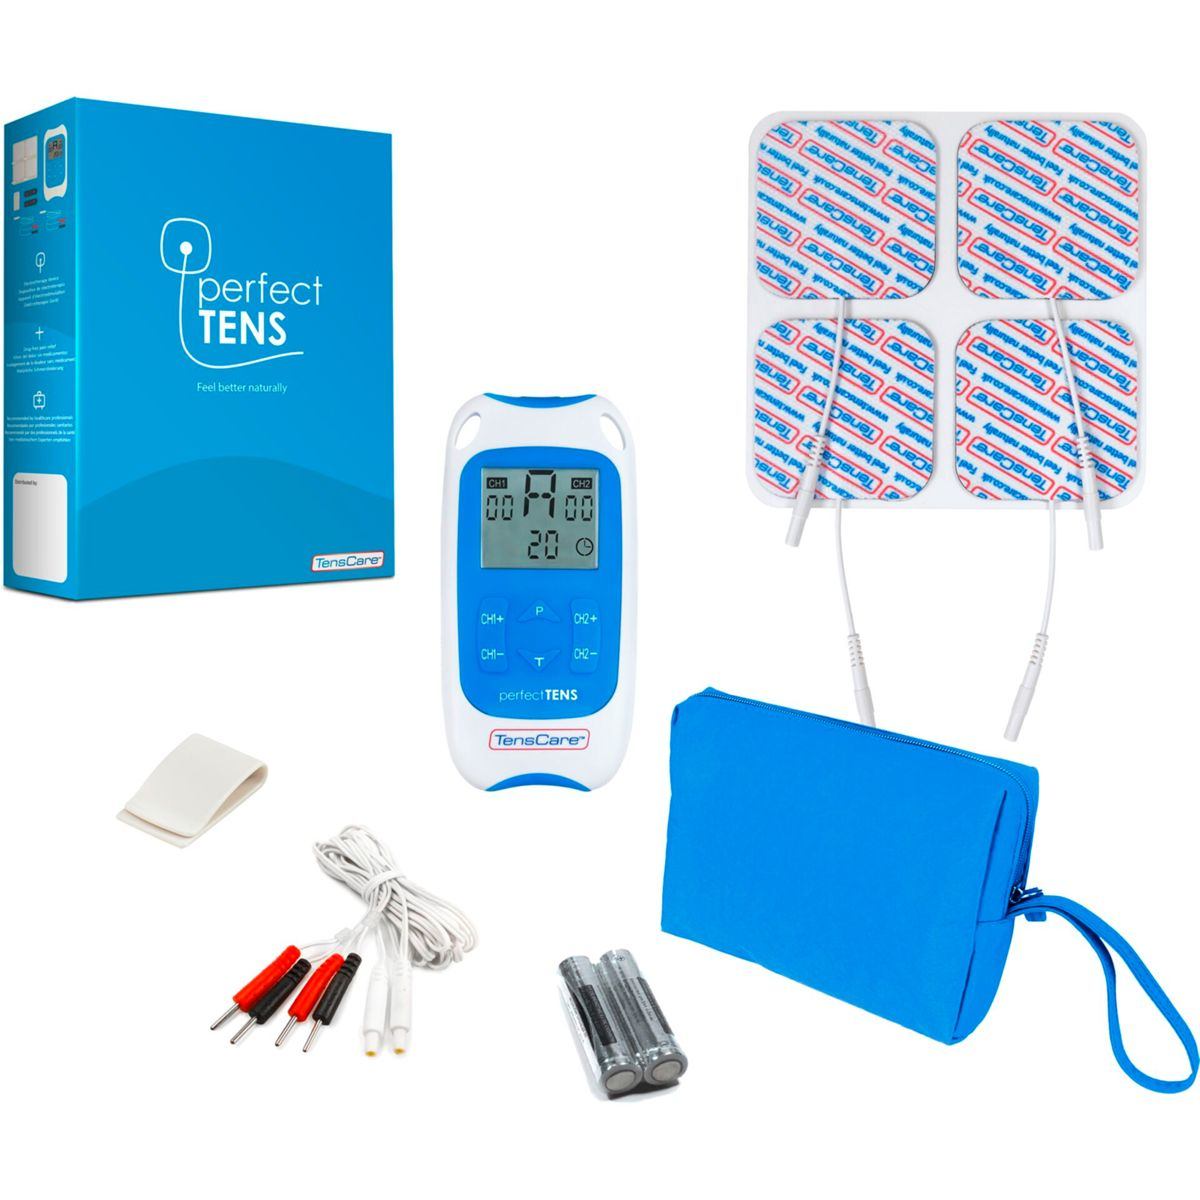 TENSCARE Perfect TENS Elektrostimulationsgerät Schmerzlinderungsgerät